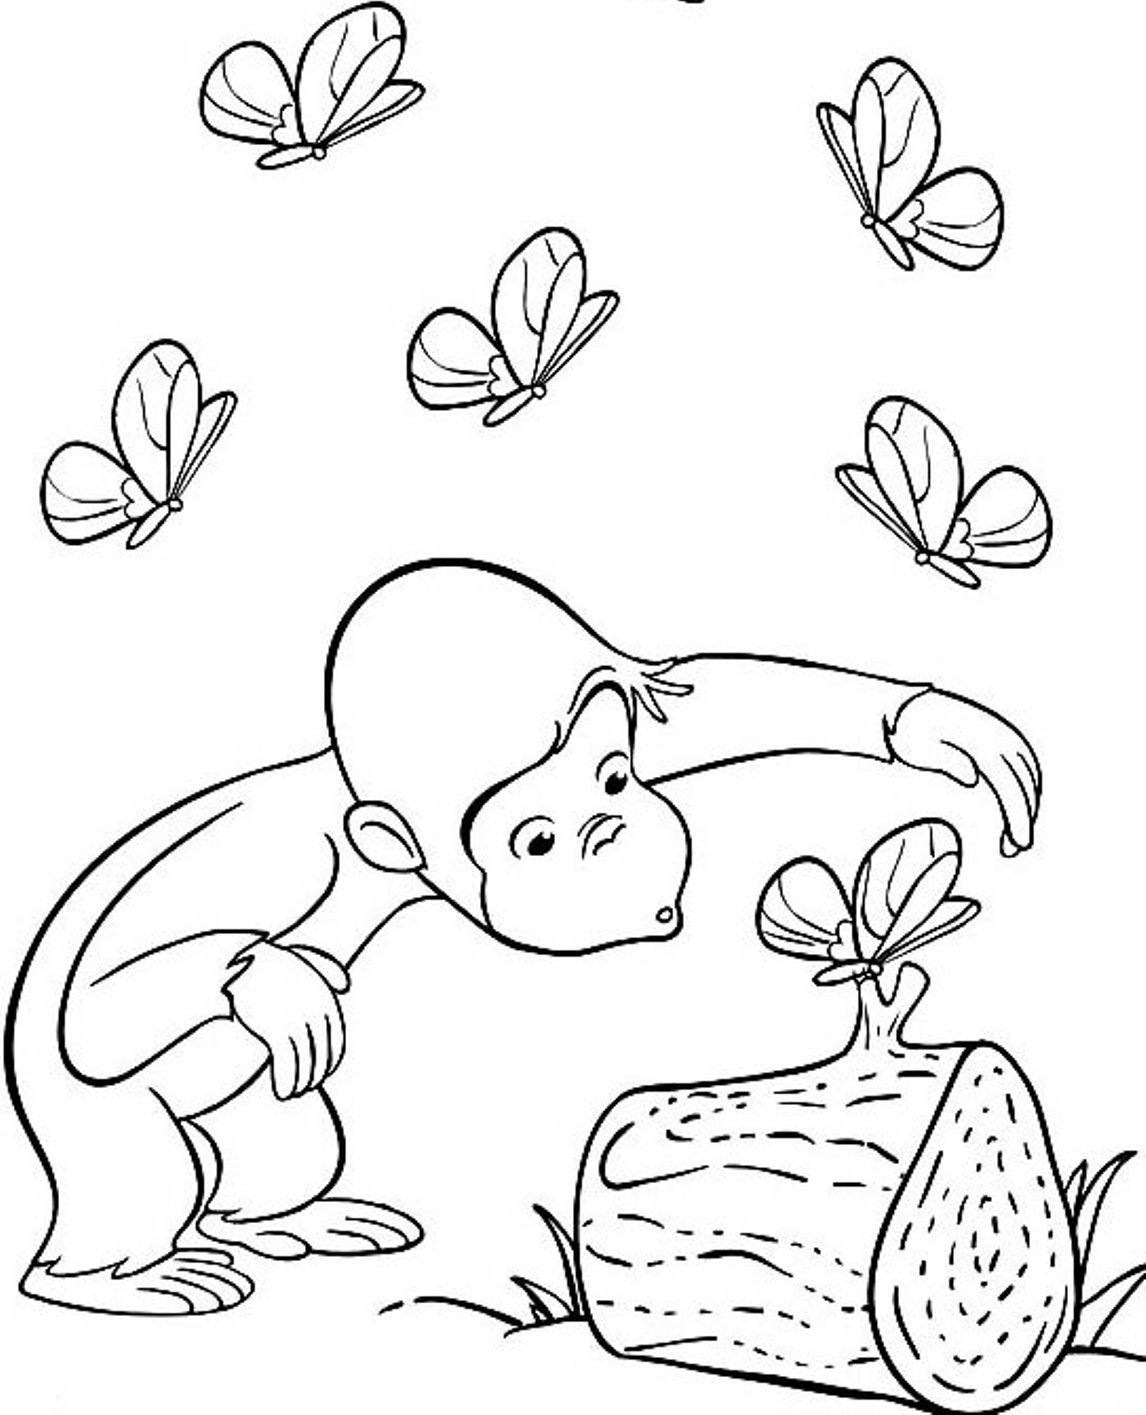 Mewarnai gambar tokoh kartun curious george si monyet 